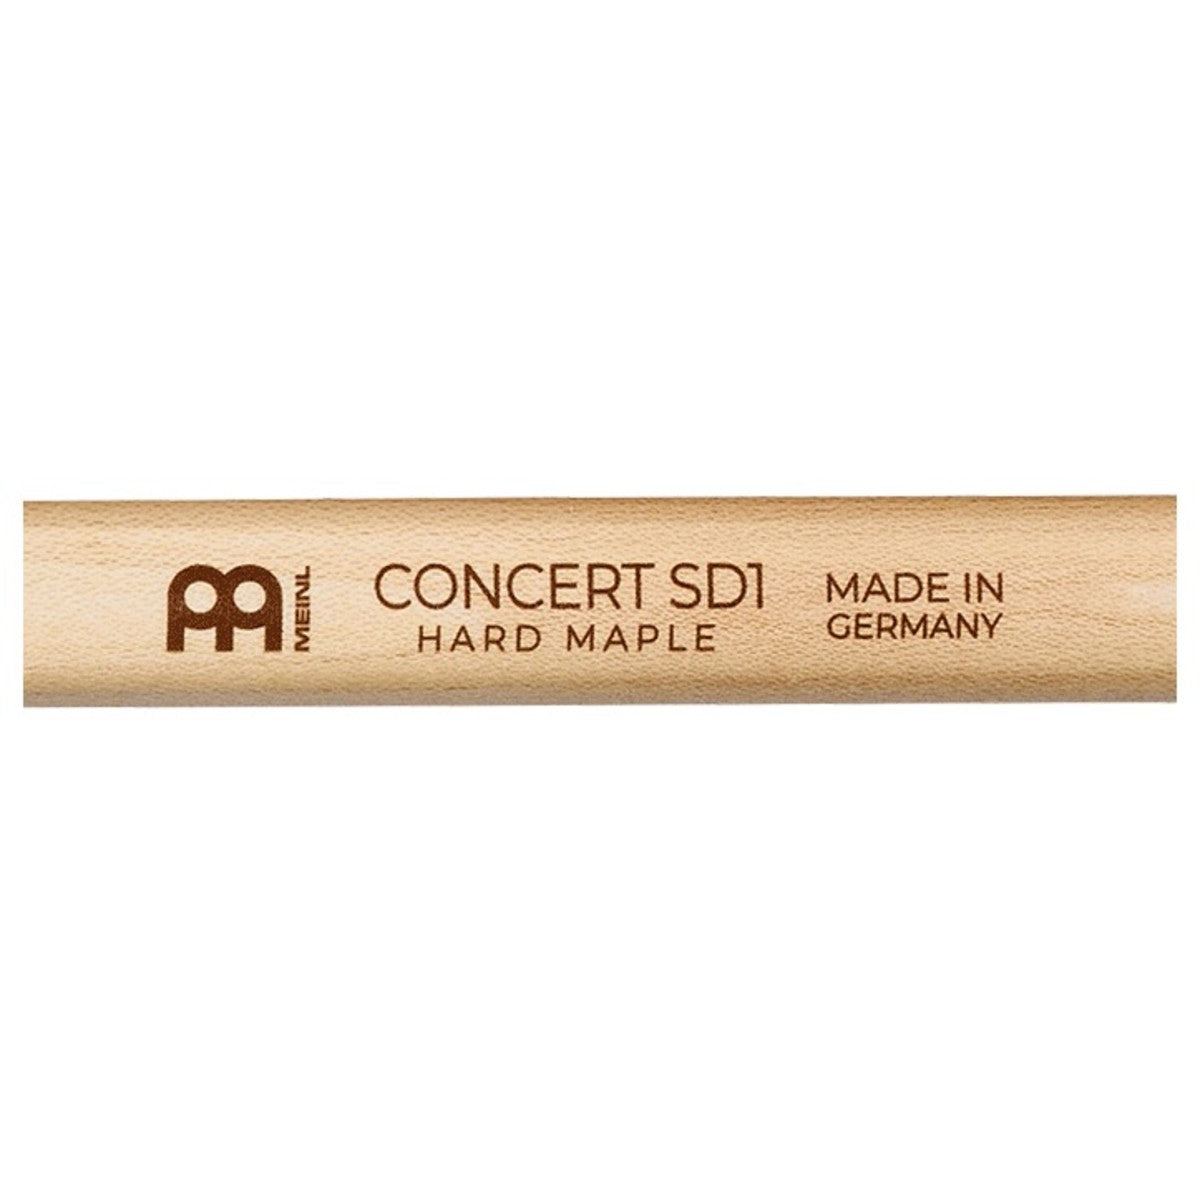 Meinl Concert HD1 Wood Tip Hickory Drumsticks